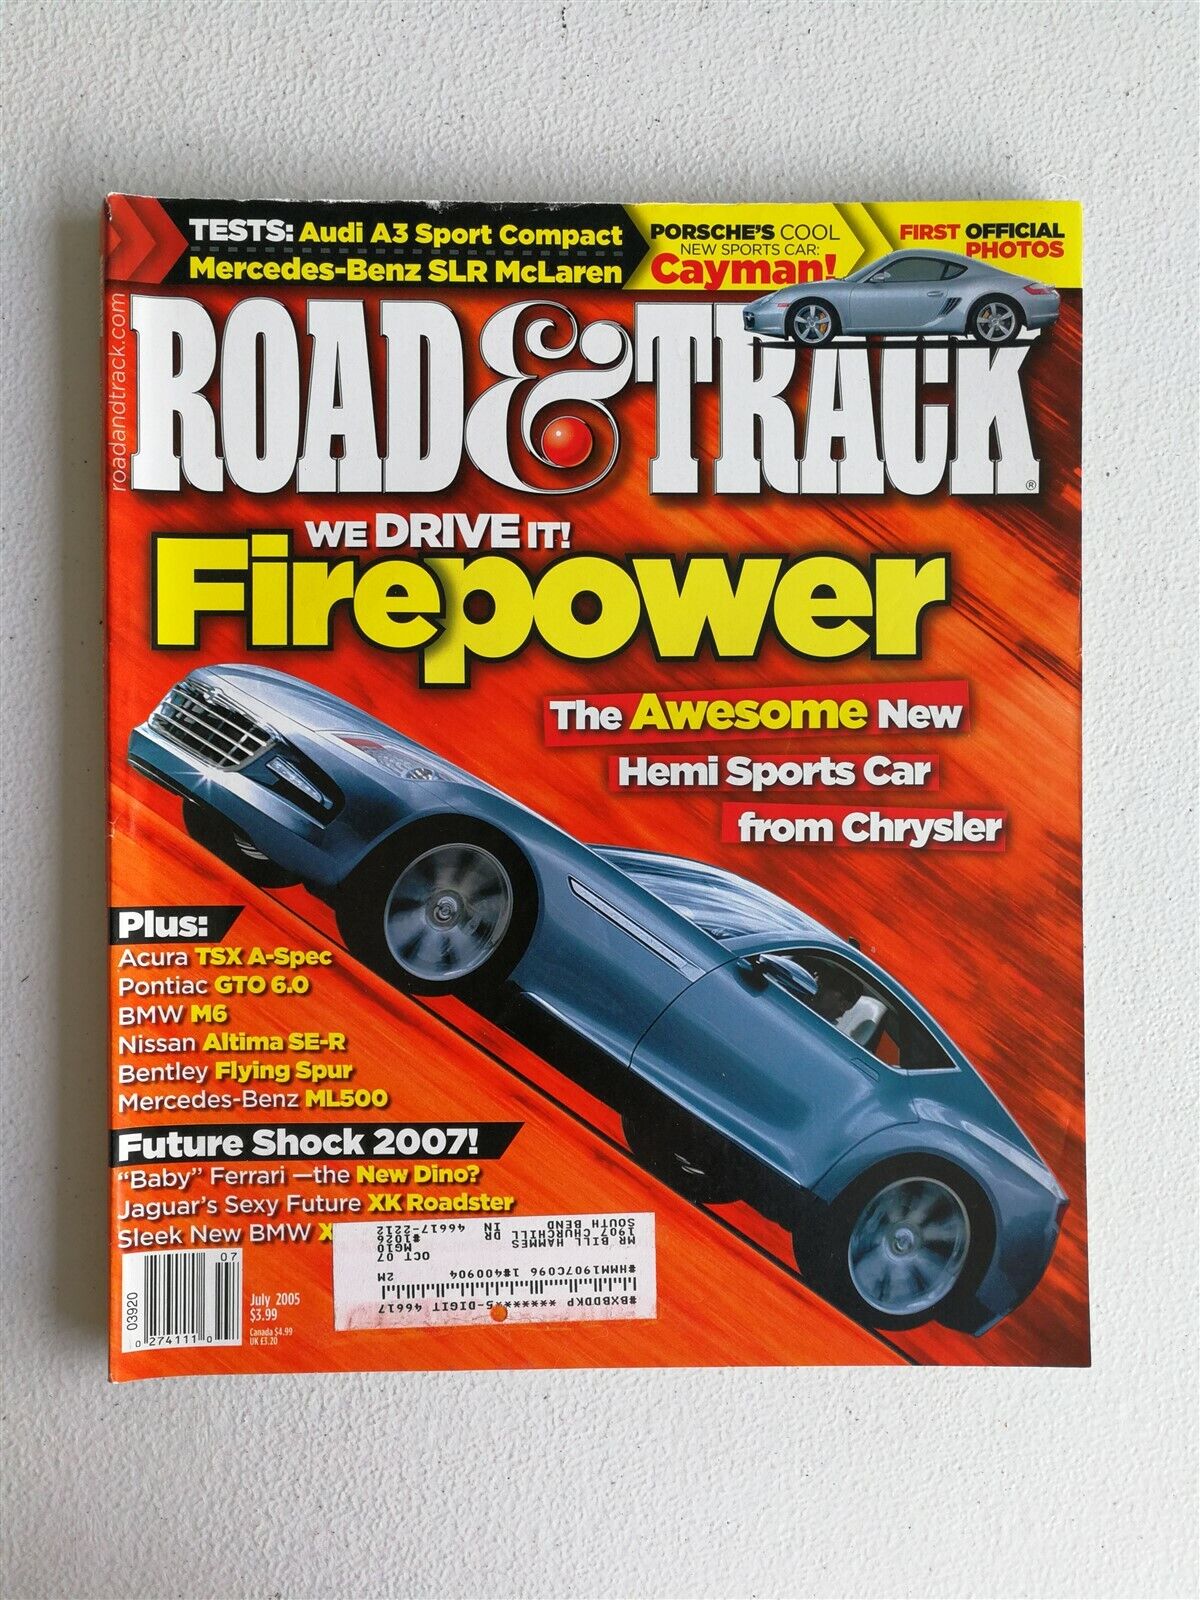 Road & Track July 2005 - Chrysler Firepower - BMW M6 - Mercedes-Benz ML500 